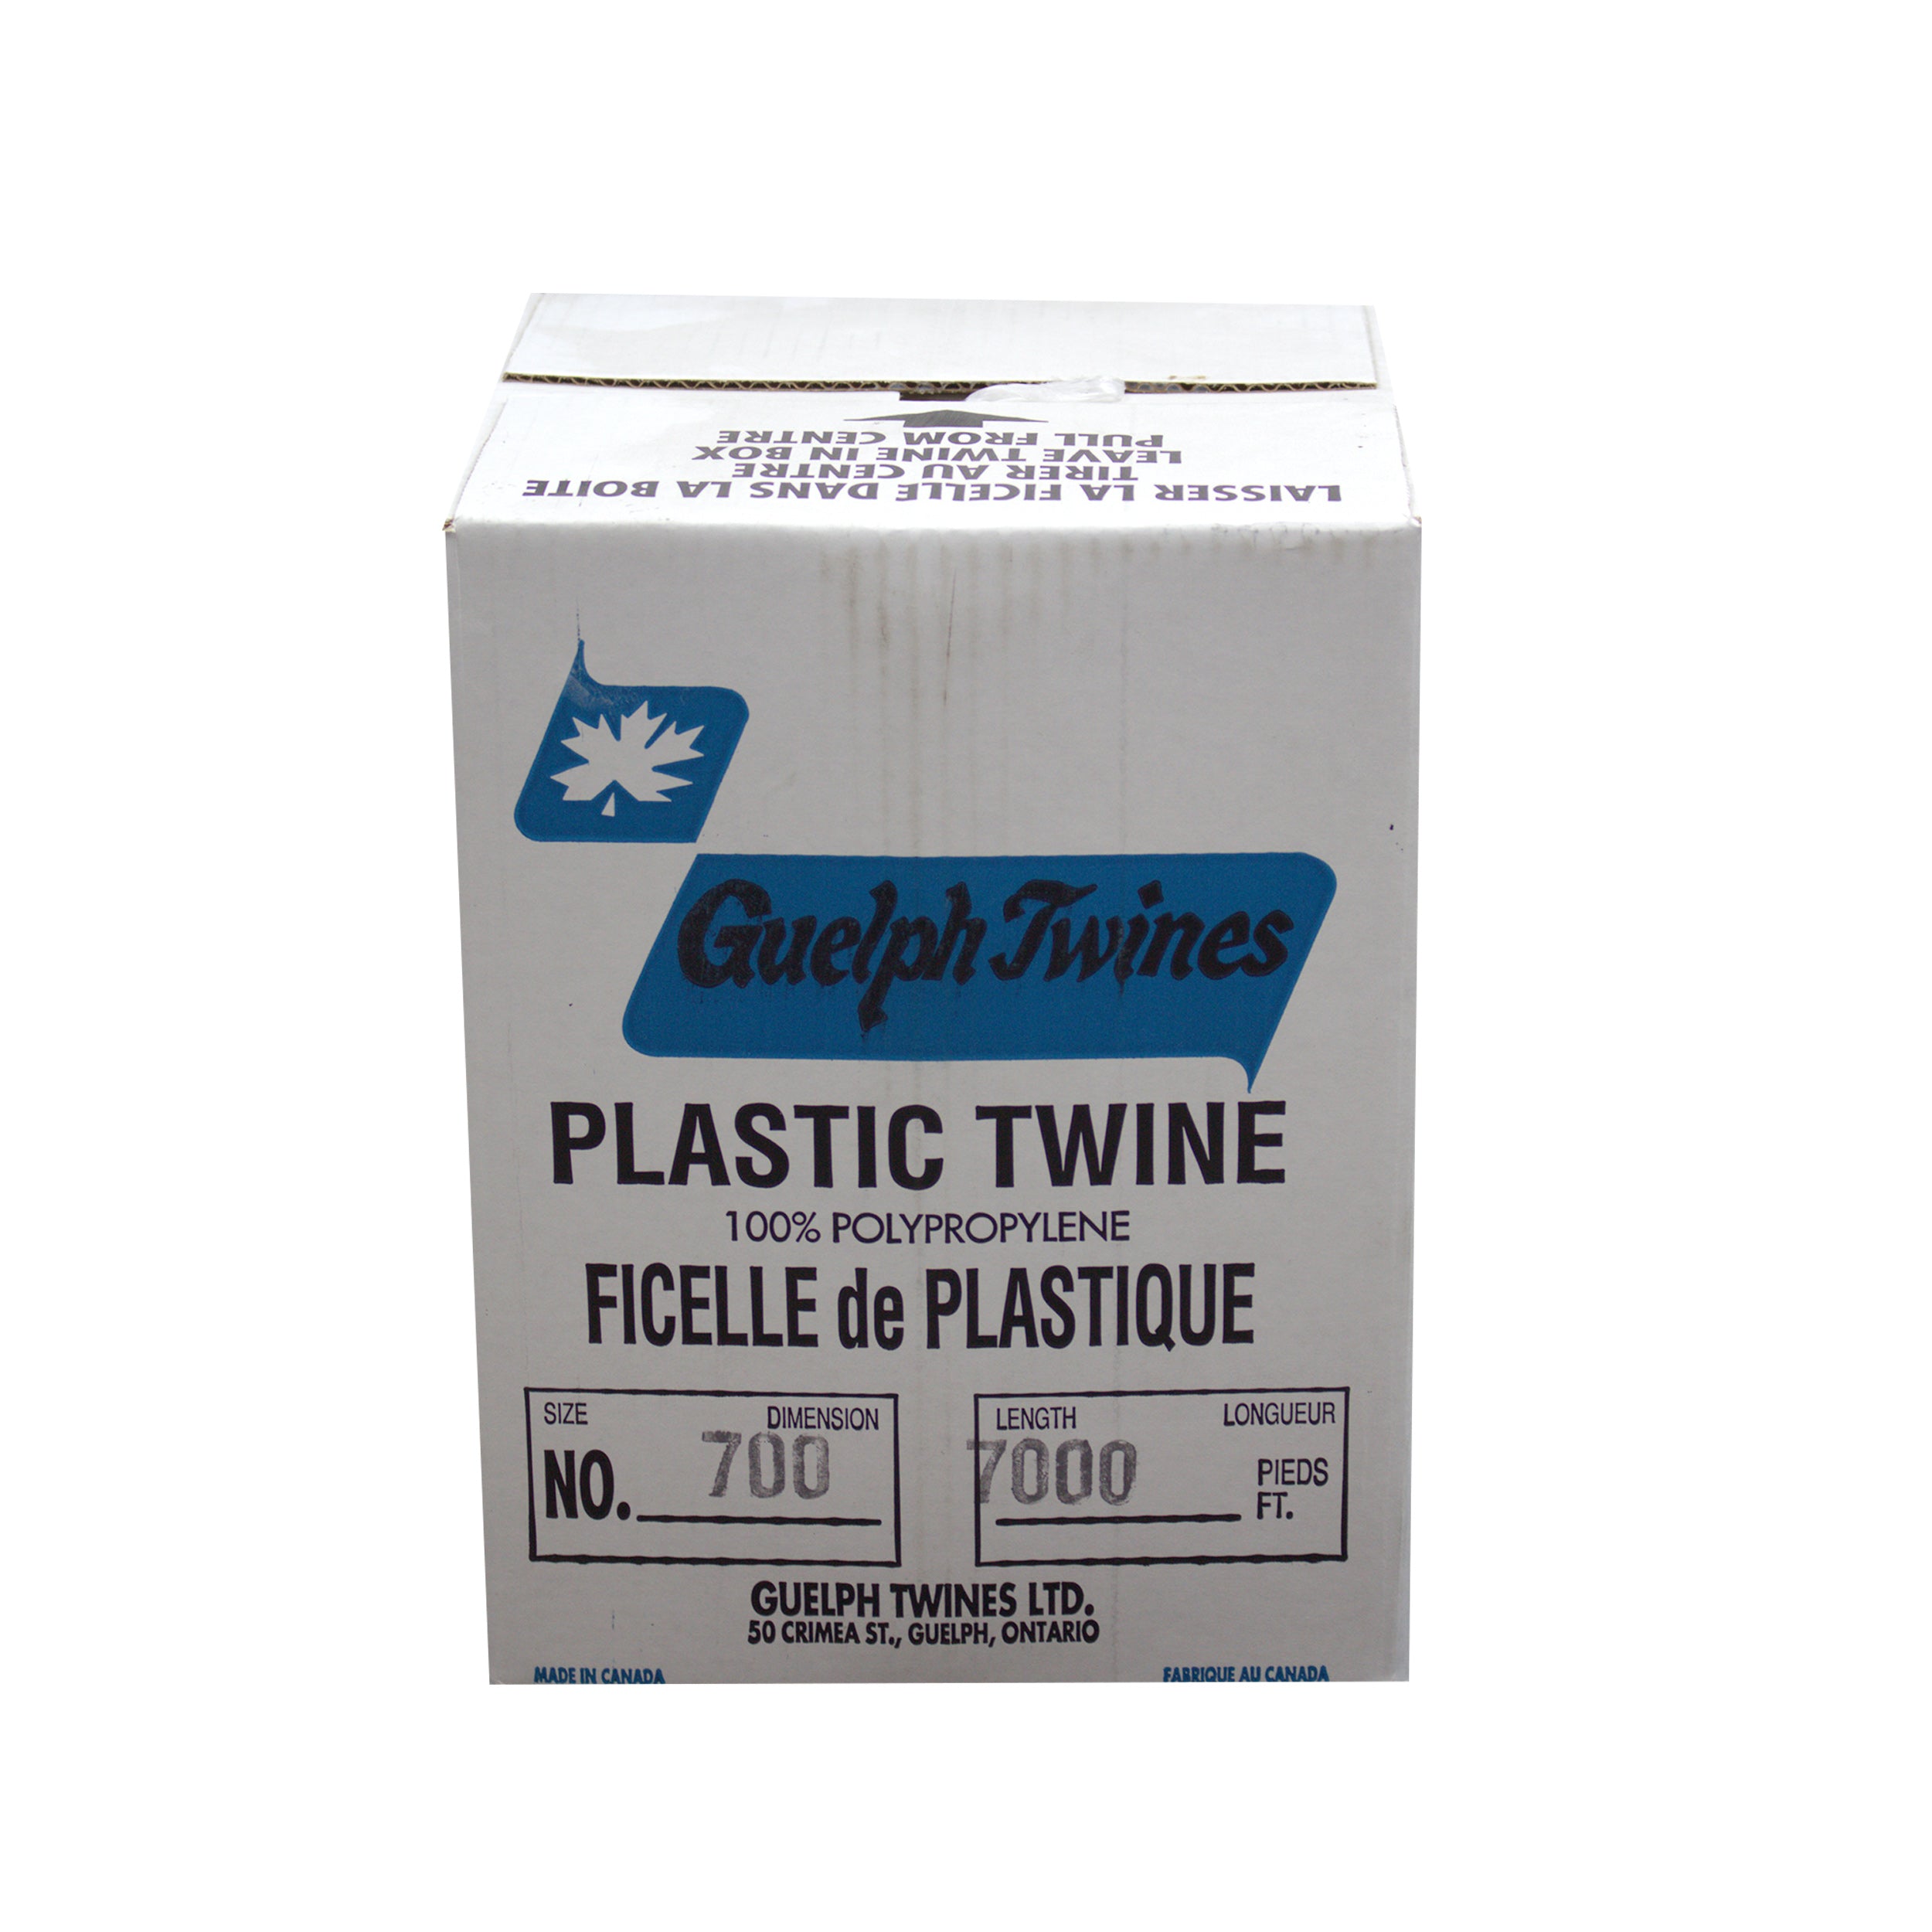 No.700 Plastic Twine, 1 Count